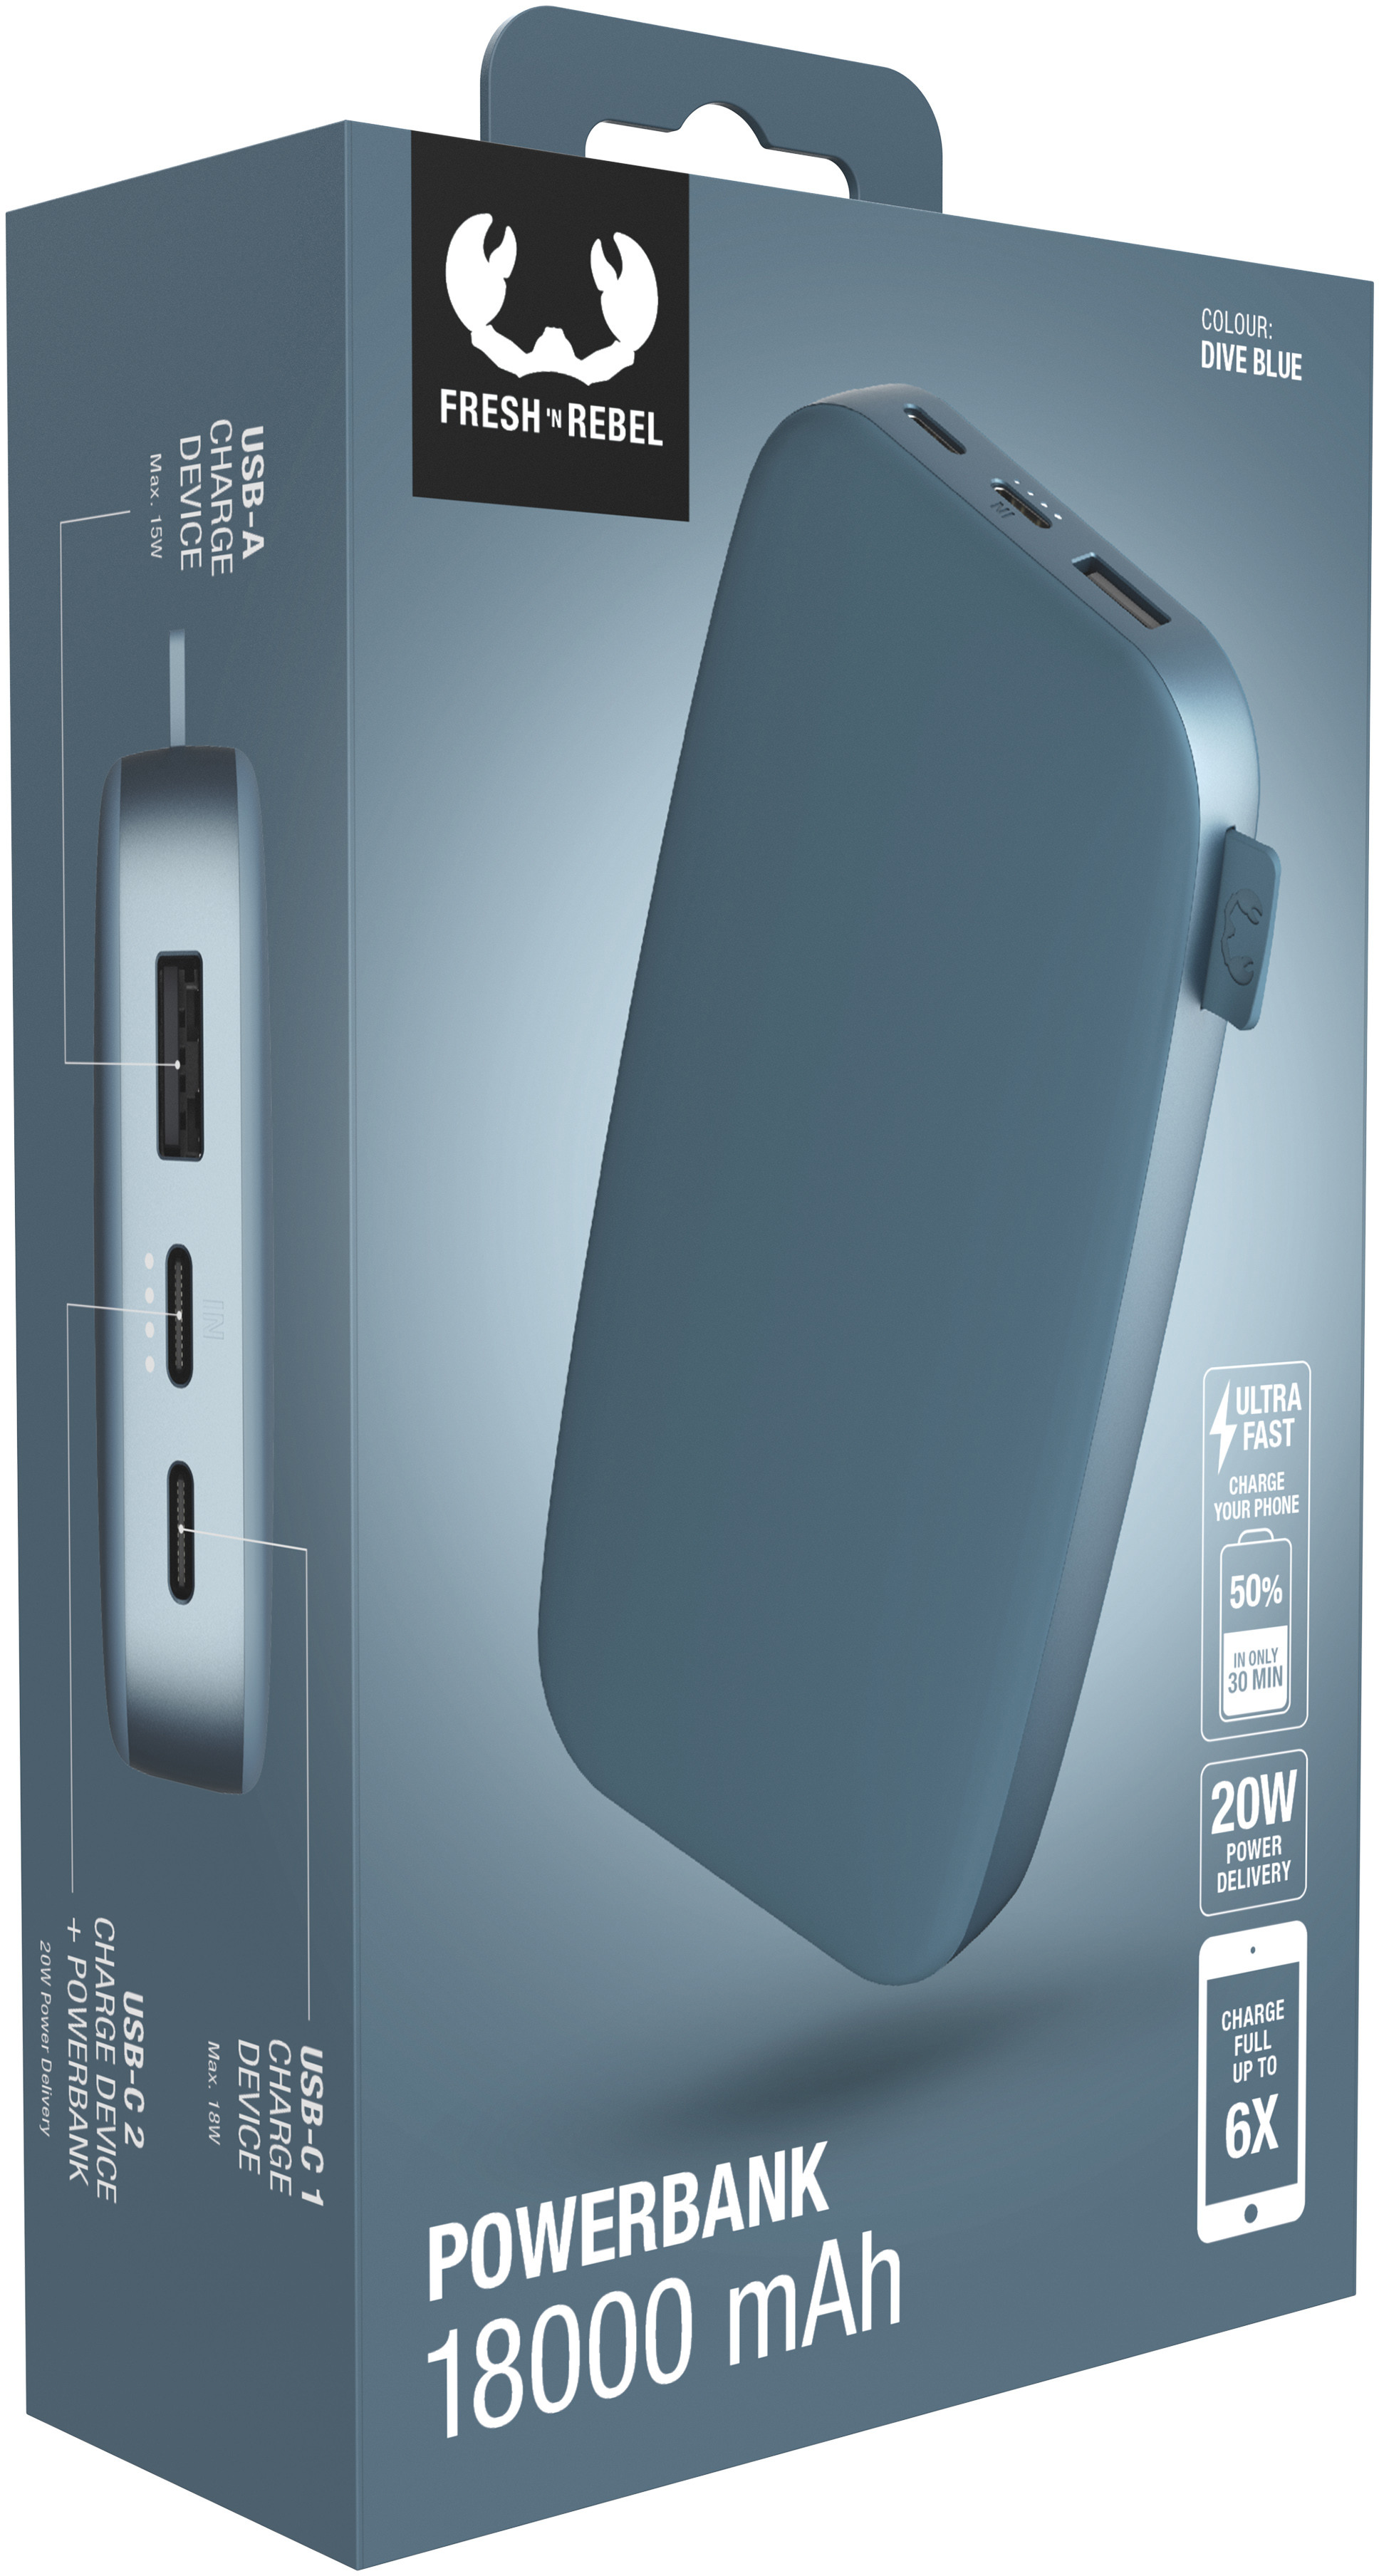 FRESH'N REBEL Powerbank 18000 mAh USB-C UFC 2PB18100DV Dive Blue 20w PD